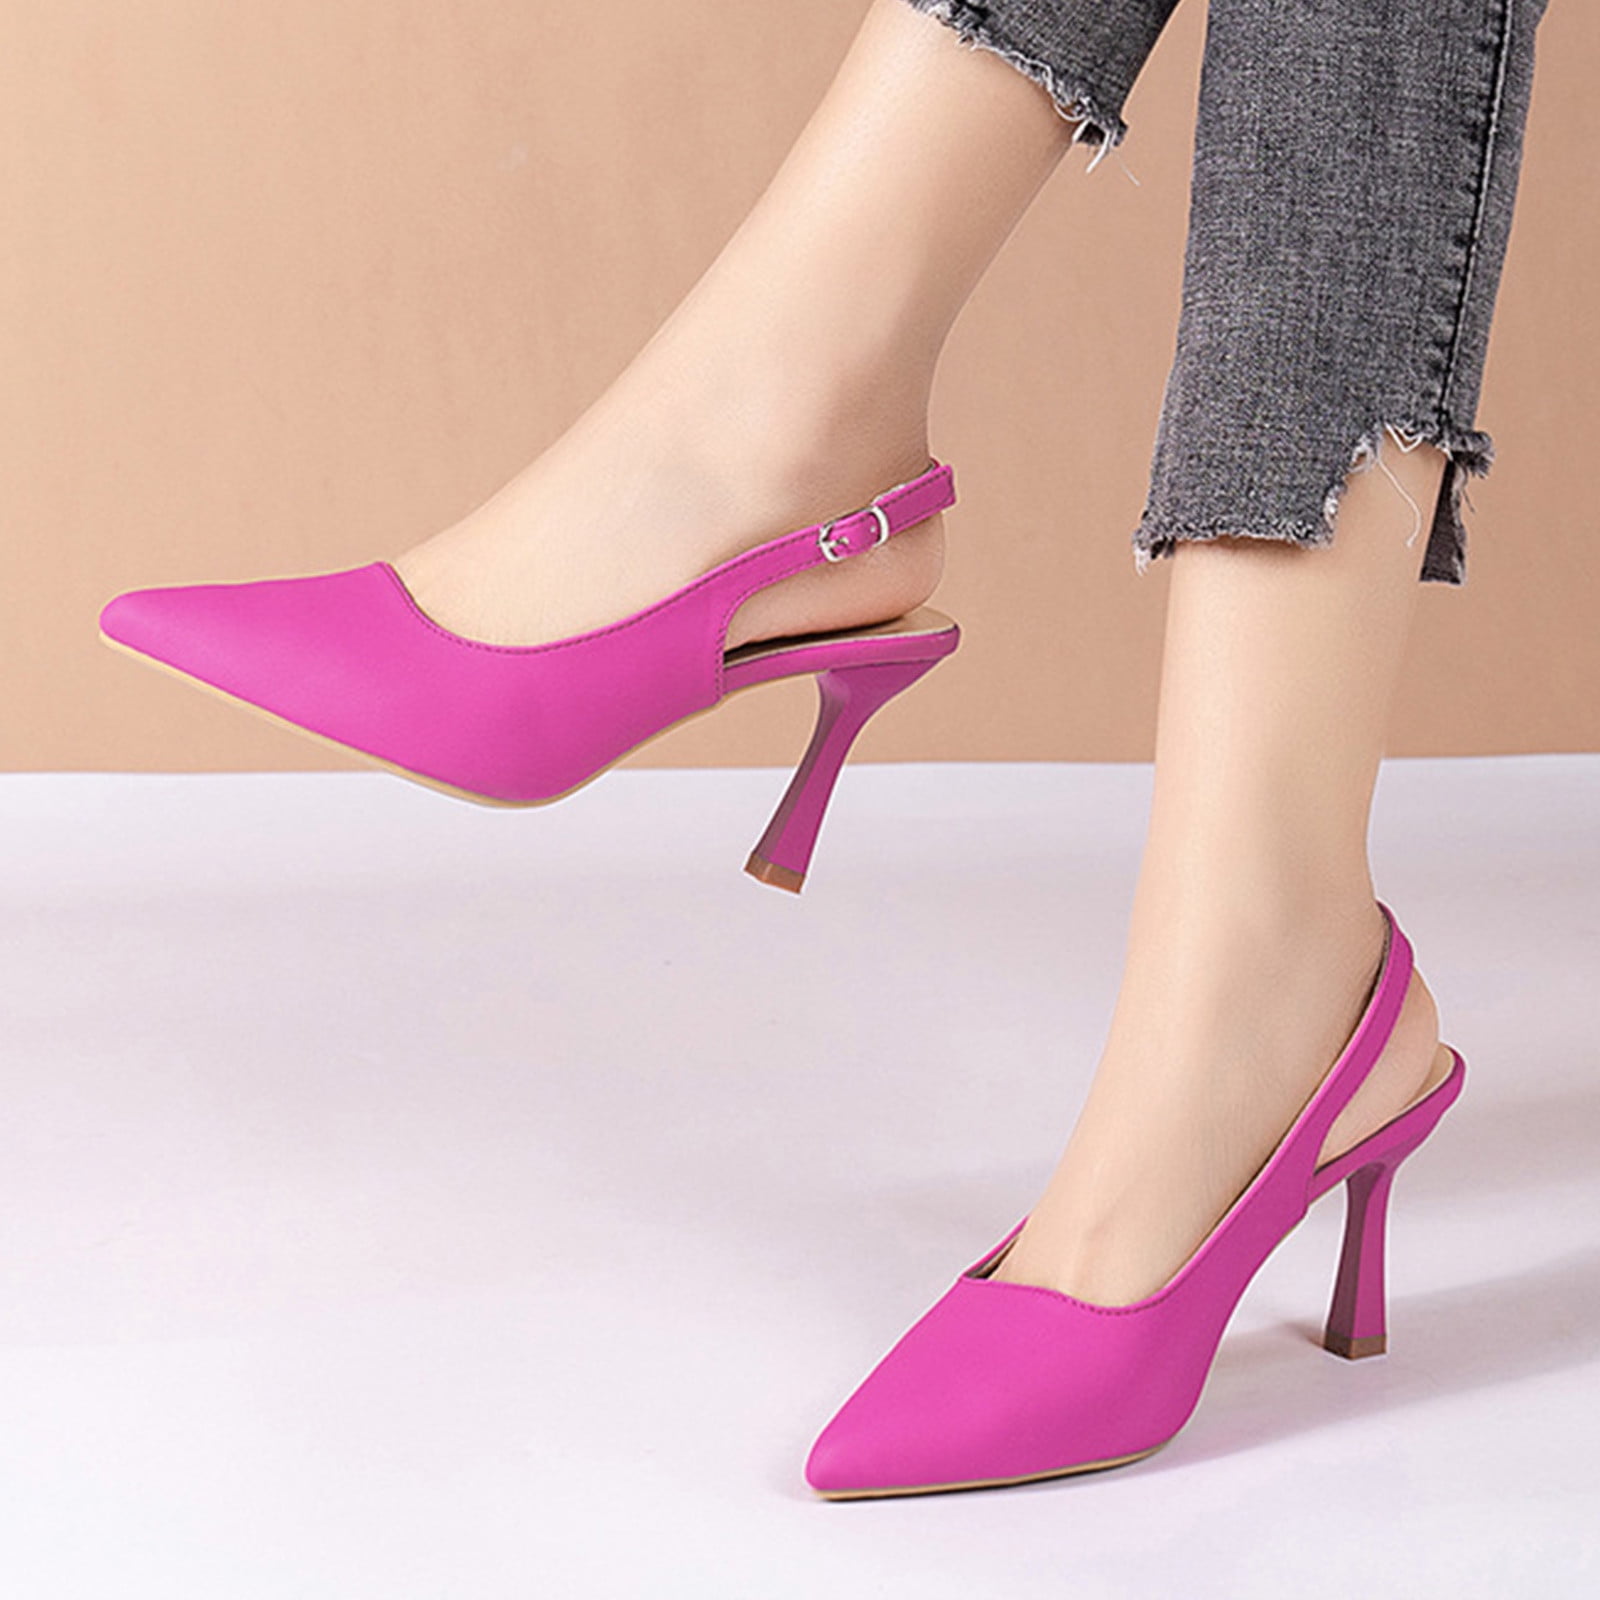 Buy Women Pink Party Pumps Online | SKU: 31-9844-24-36-Metro Shoes